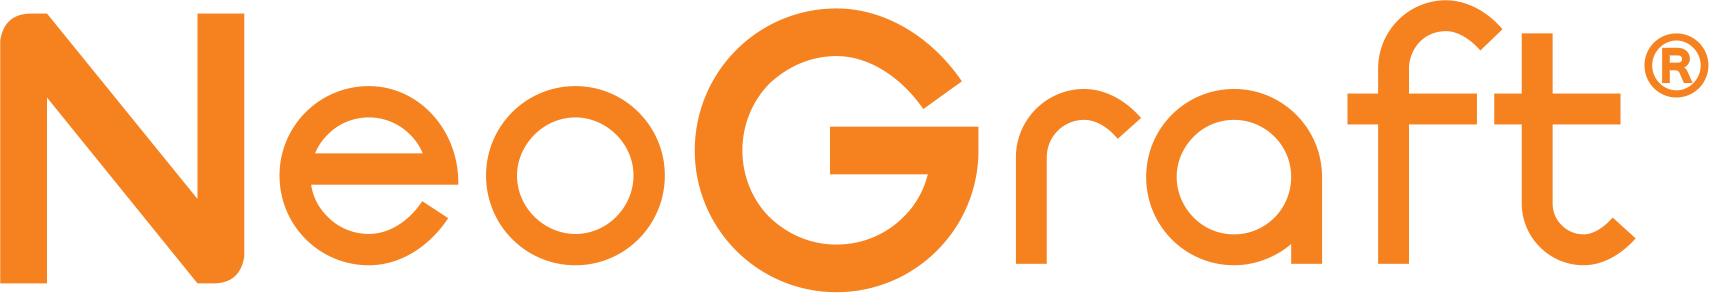 NeoGraft logo image